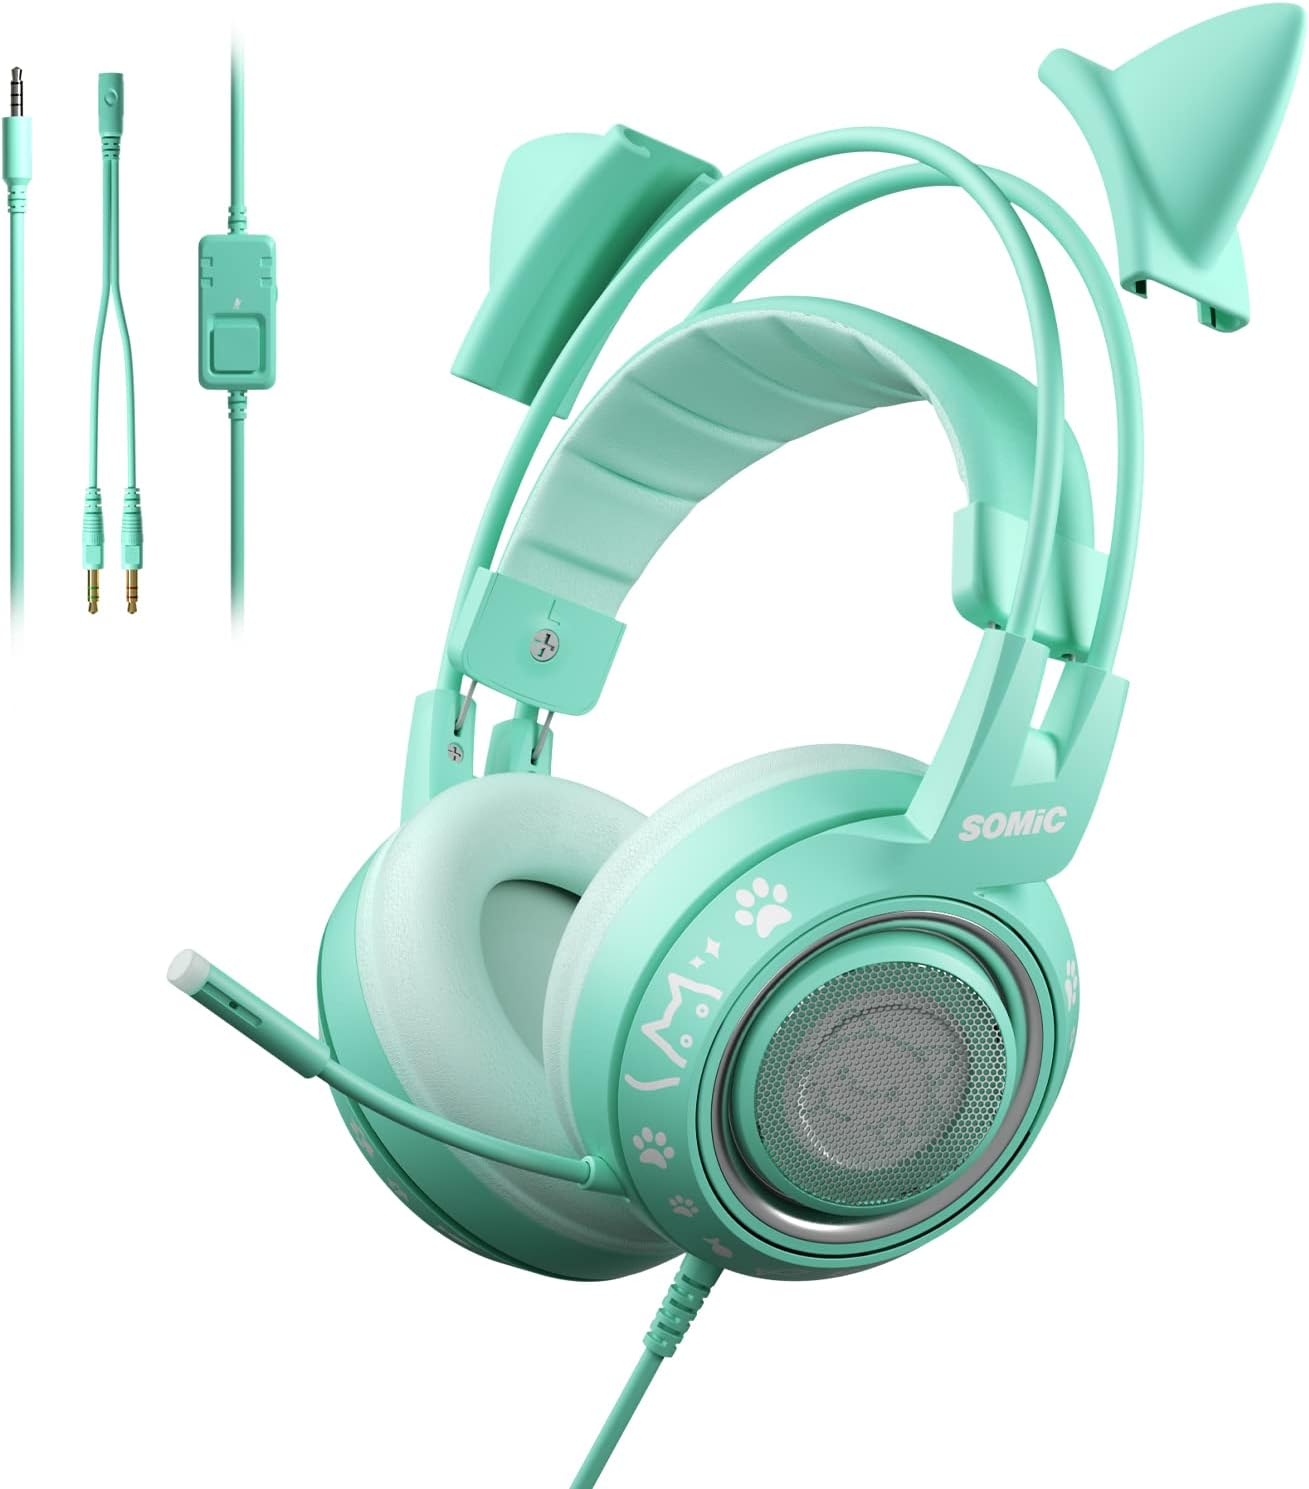 Headset - SOMIC G951S Green Gaming Headset